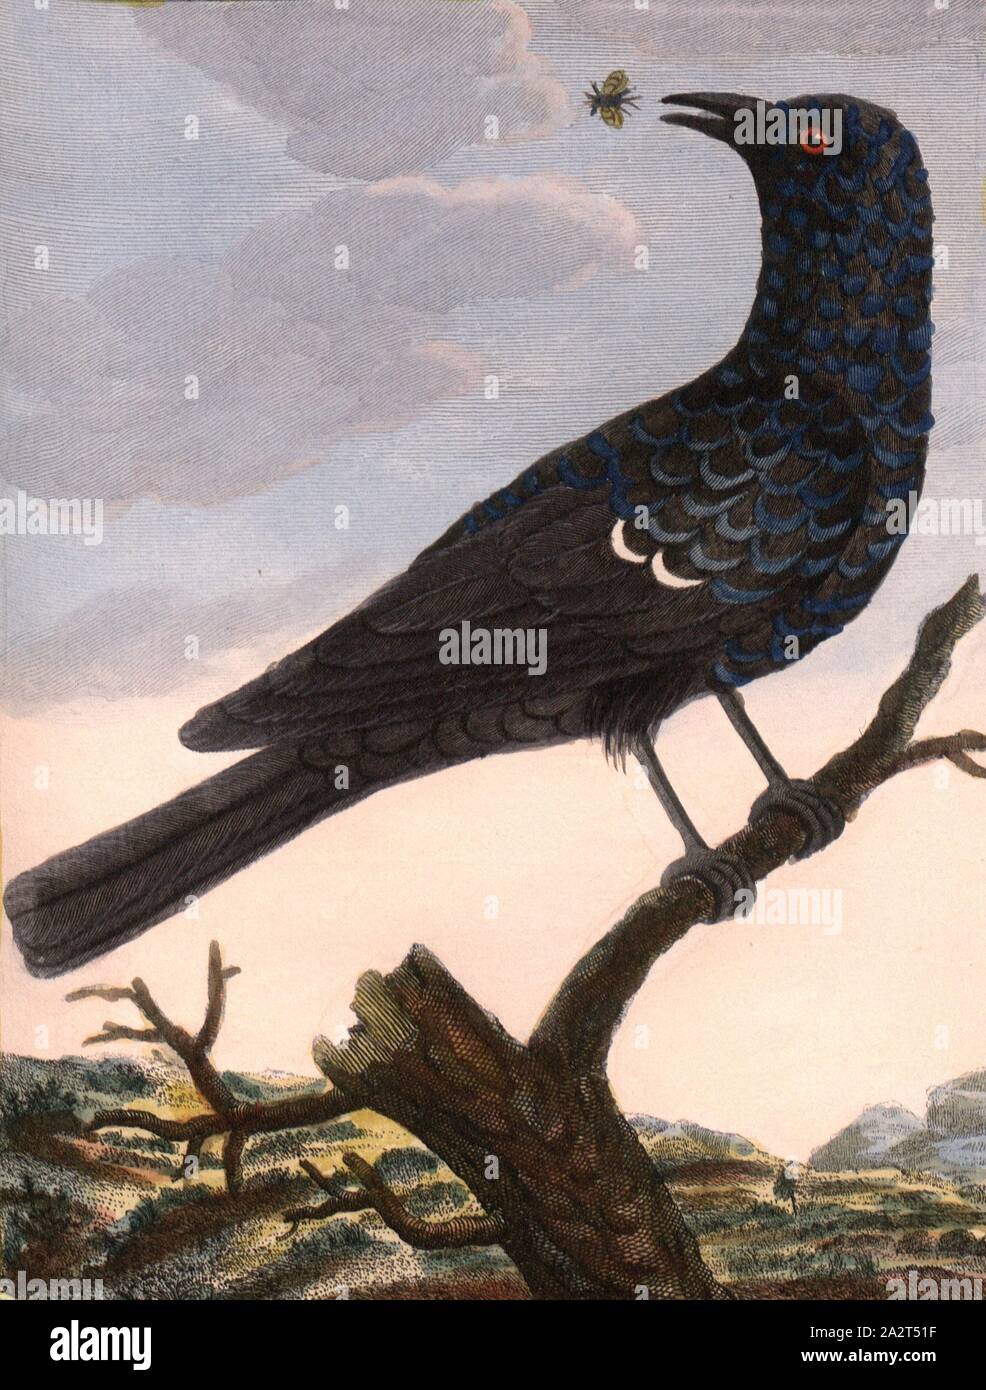 Bluebird of China, Blue Blackbird (Blue-throated Alder) from China, Signed: P. Sonnerat pinx, J.J. Avril sculp, Plate 108, after p. 188 (Vol. 2), Sonnerat, Pierre M. (pinx.); Avril, J. J. (sculp.), 1782, Sonnerat, Pierre Stock Photo